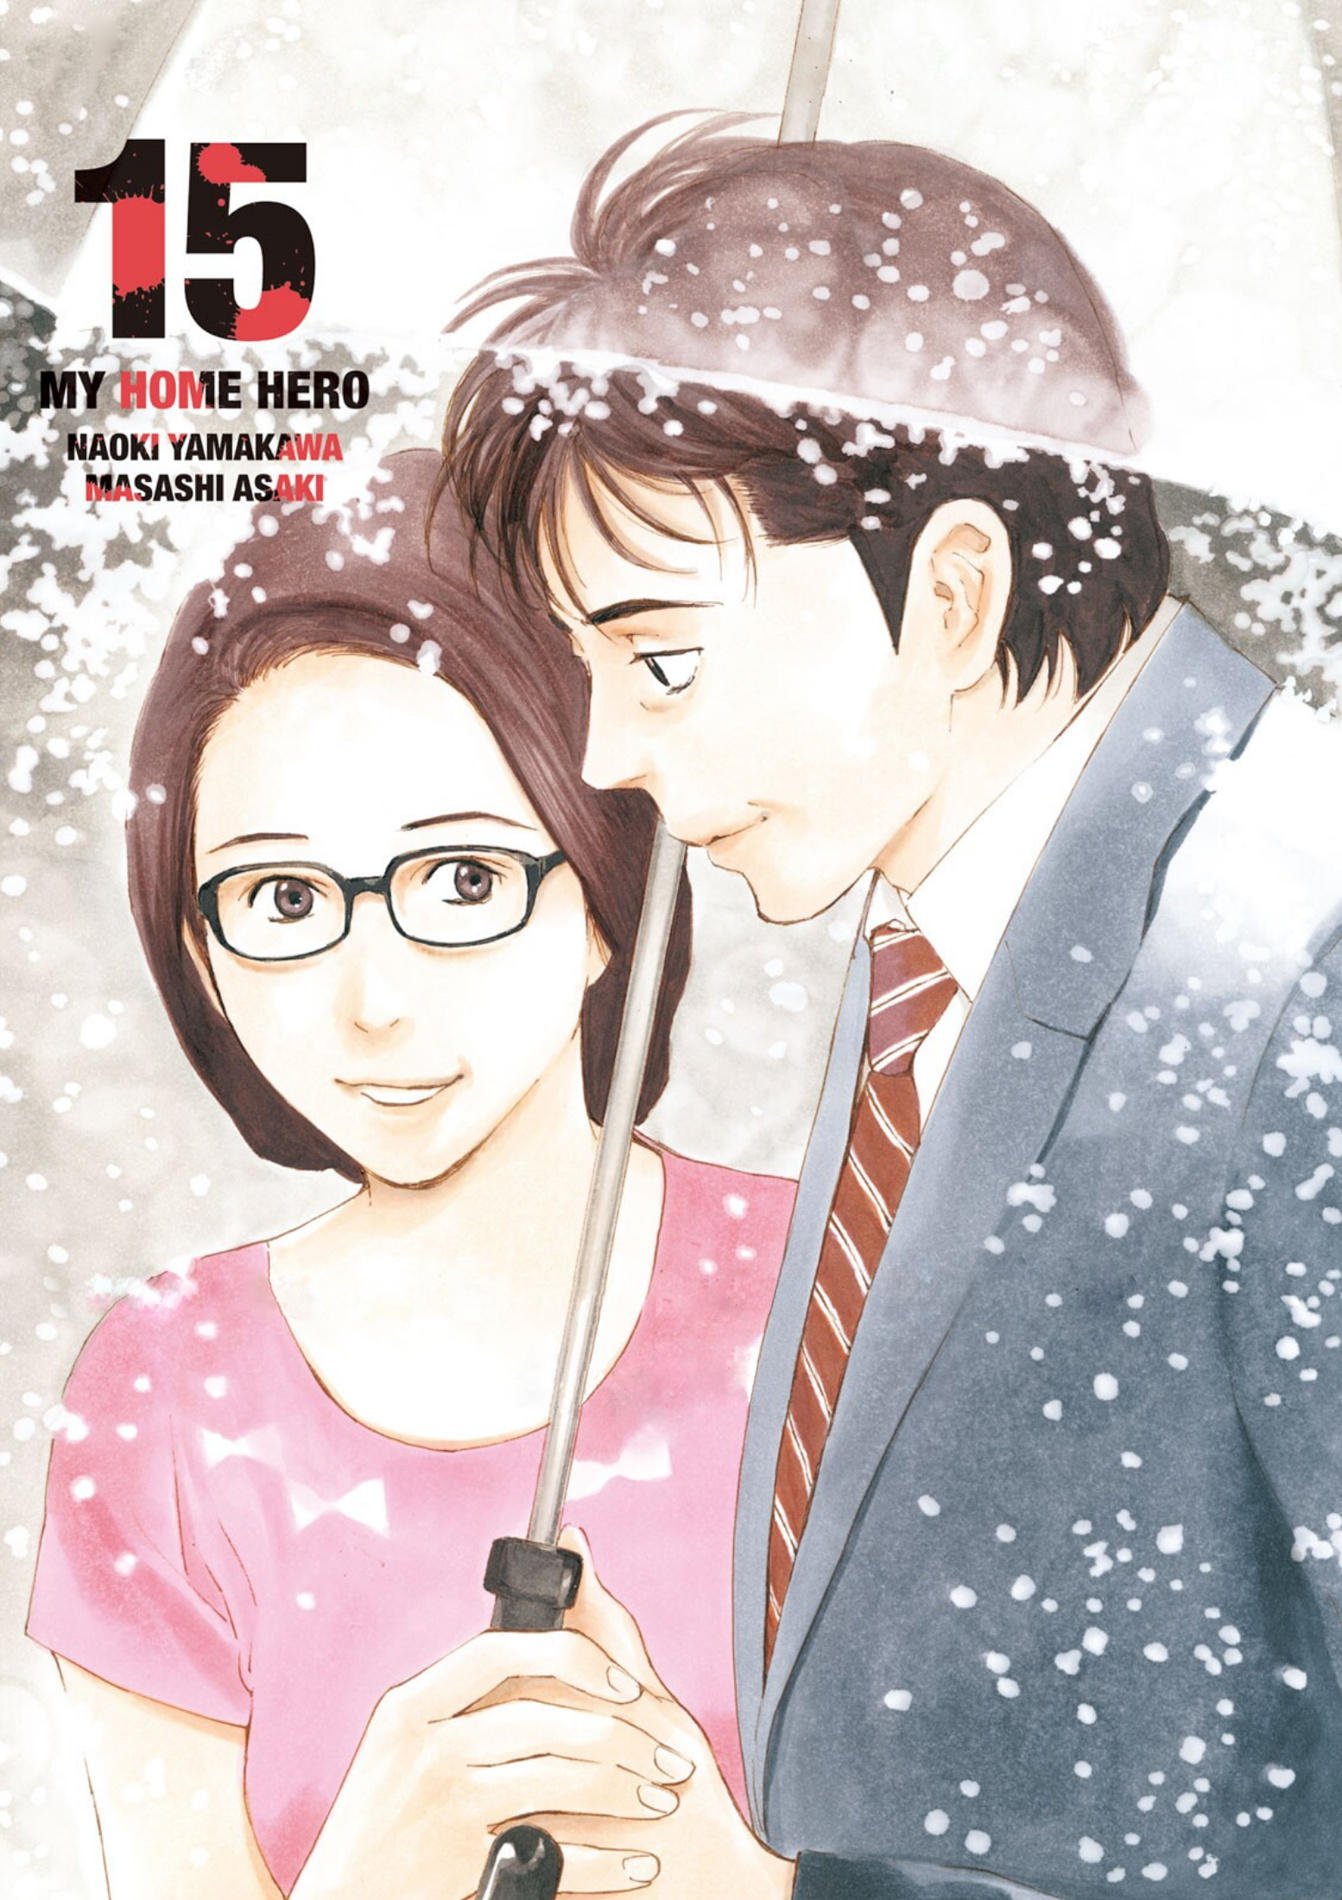 Read My Home Hero Vol.2 Chapter 15: 10 Million!? on Mangakakalot